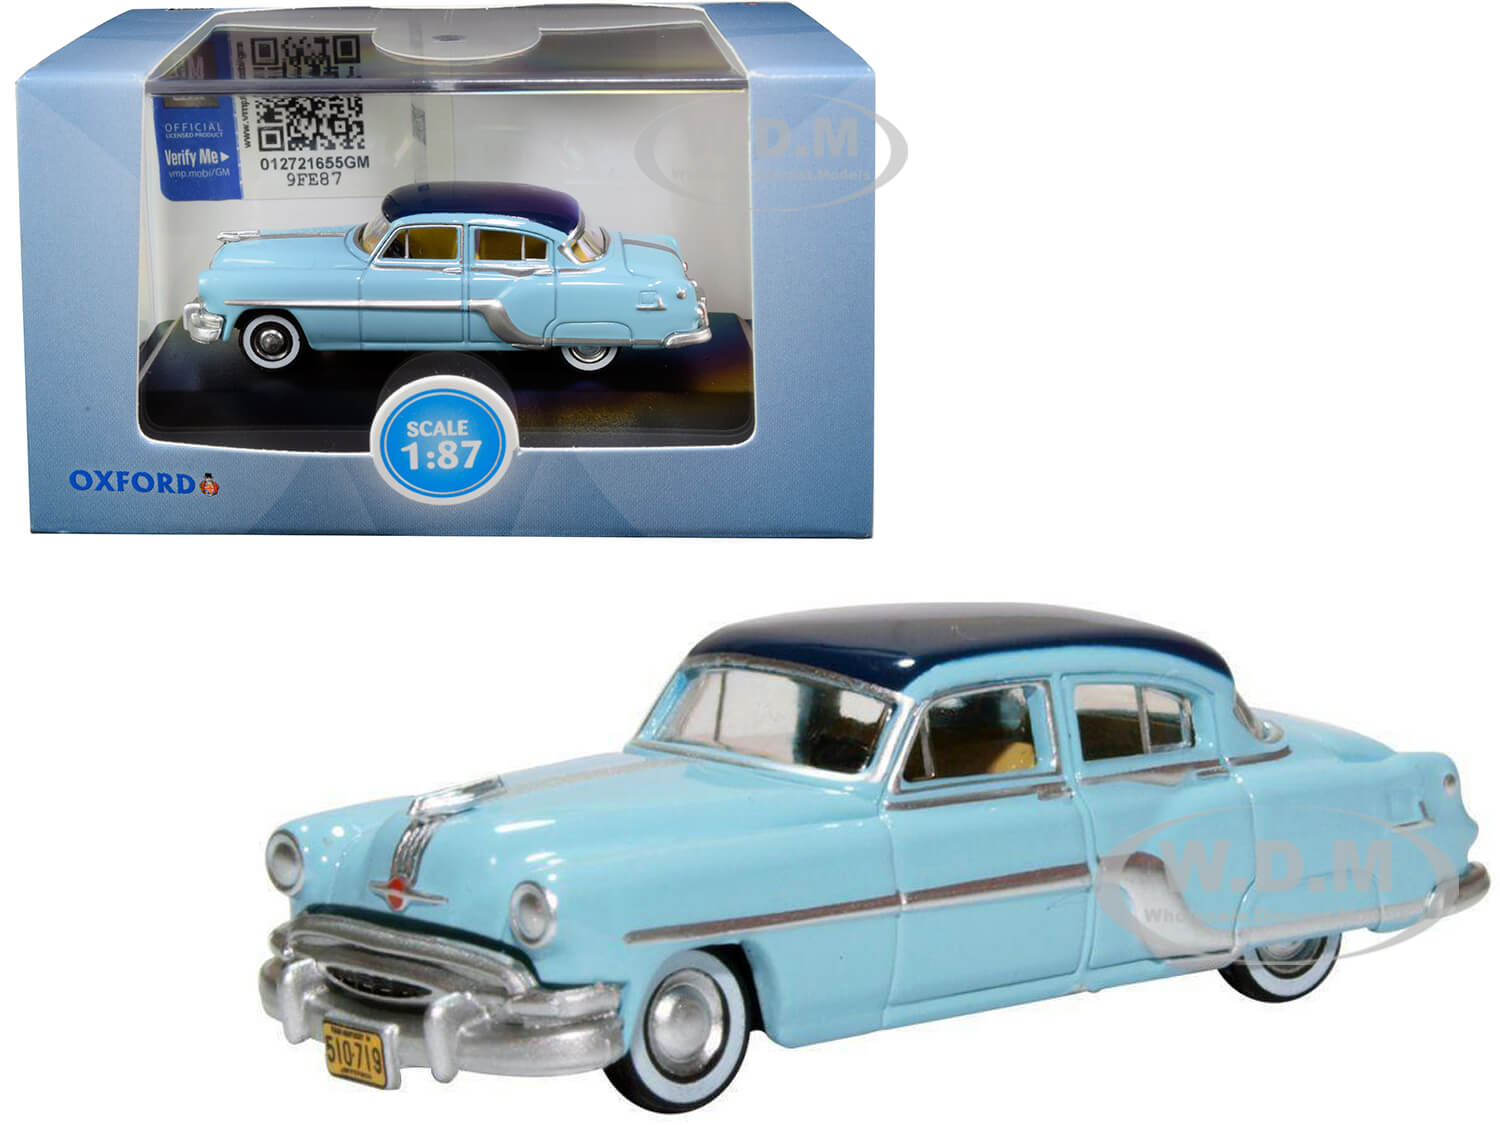 1954 Pontiac Chieftain 4 Door Mayfair Blue with San Marino Blue Top 1/87 (HO) Scale Diecast Model Car by Oxford Diecast